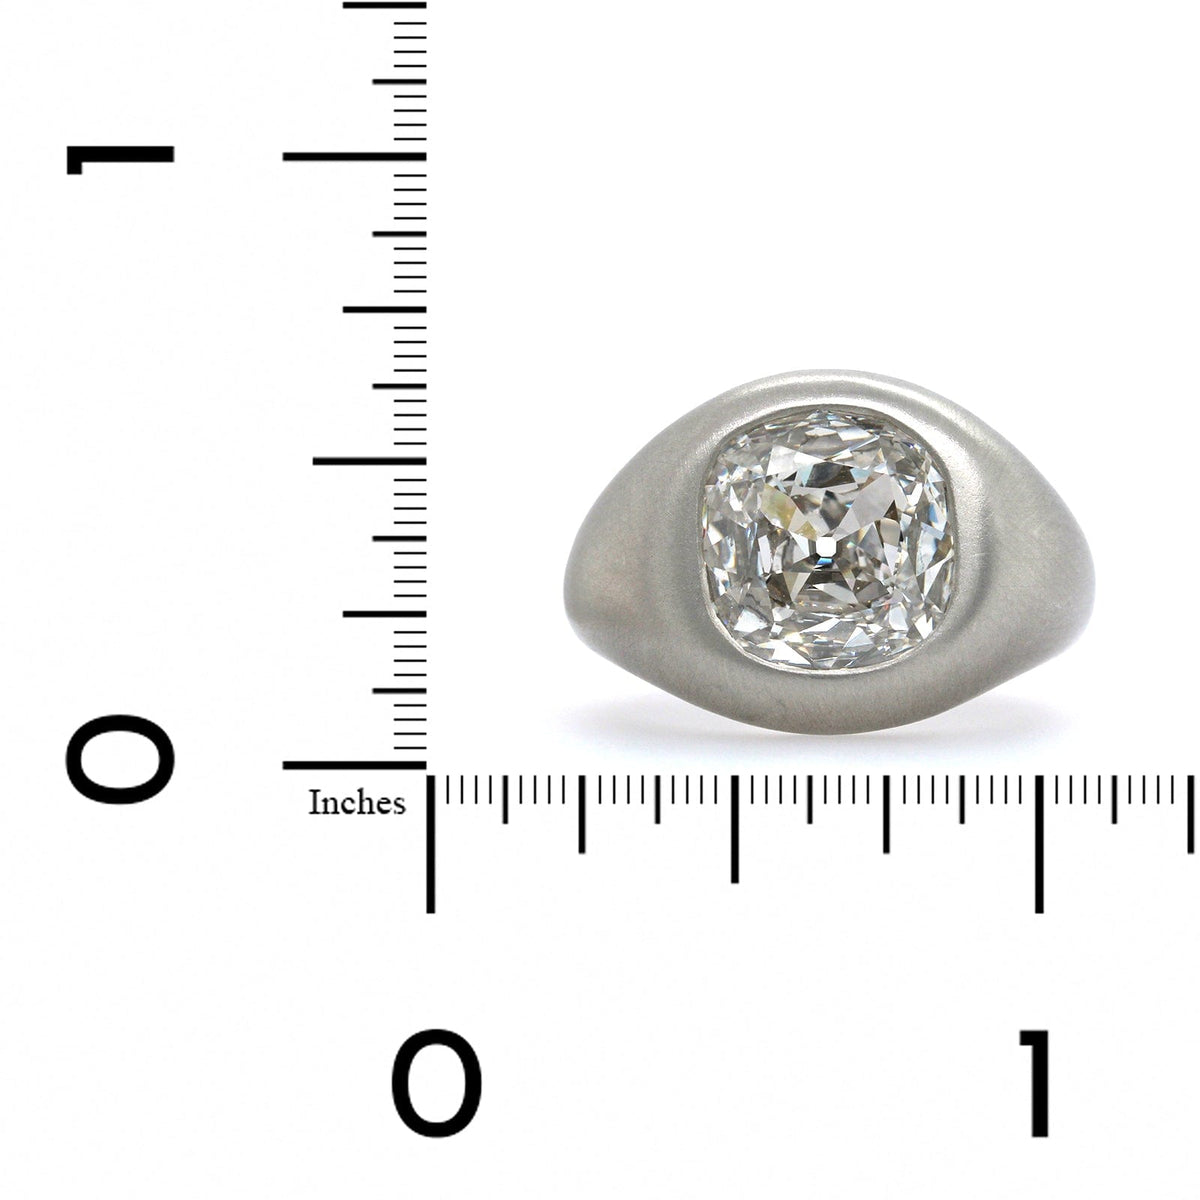 Platinum Cushion Cut Diamond Bezel Set Ring